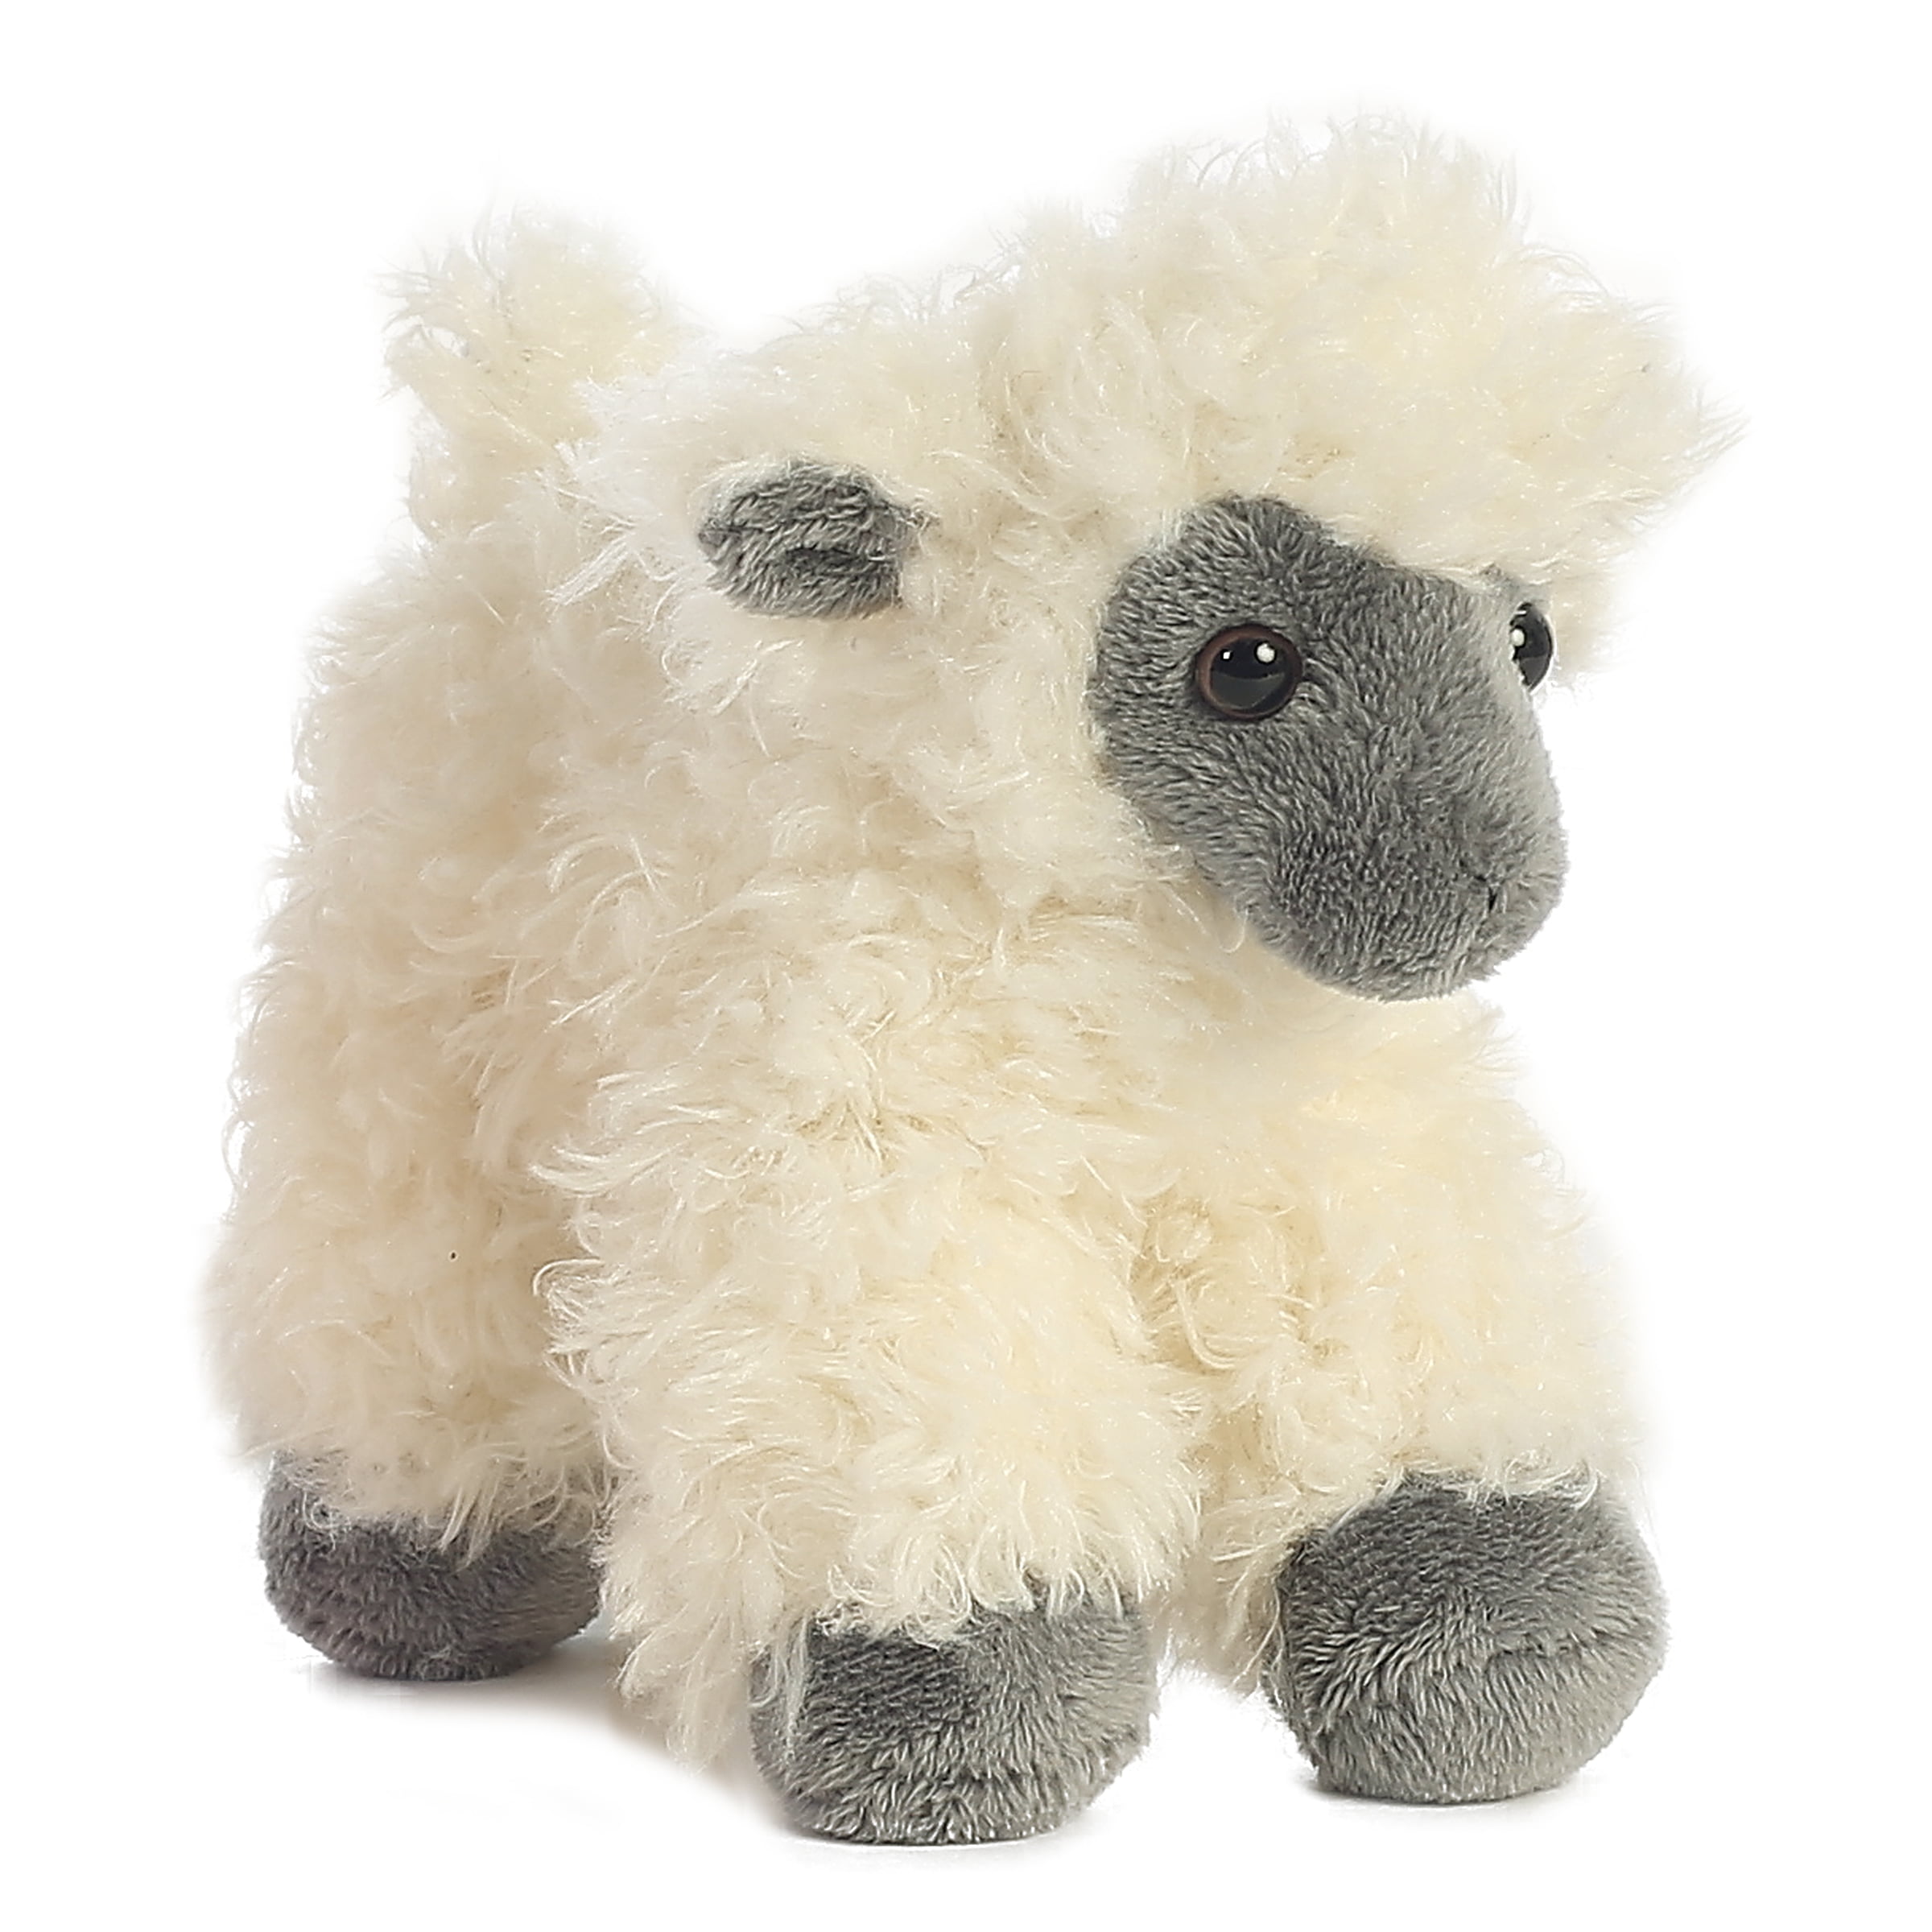 31376 8" Black Face Sheep Plush Stuffed Animal Toy 